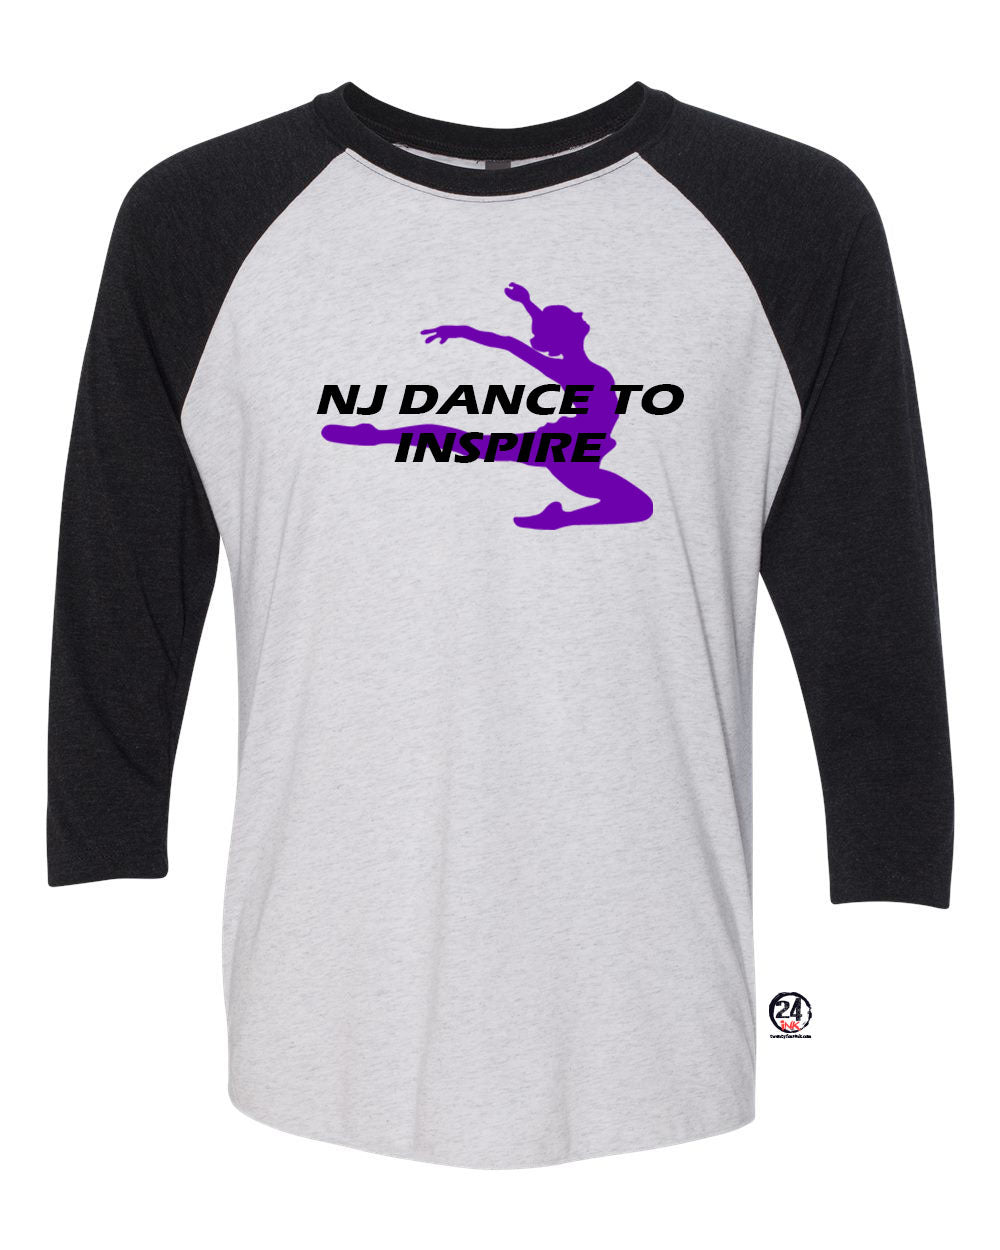 NJ Dance Design 1 raglan shirt